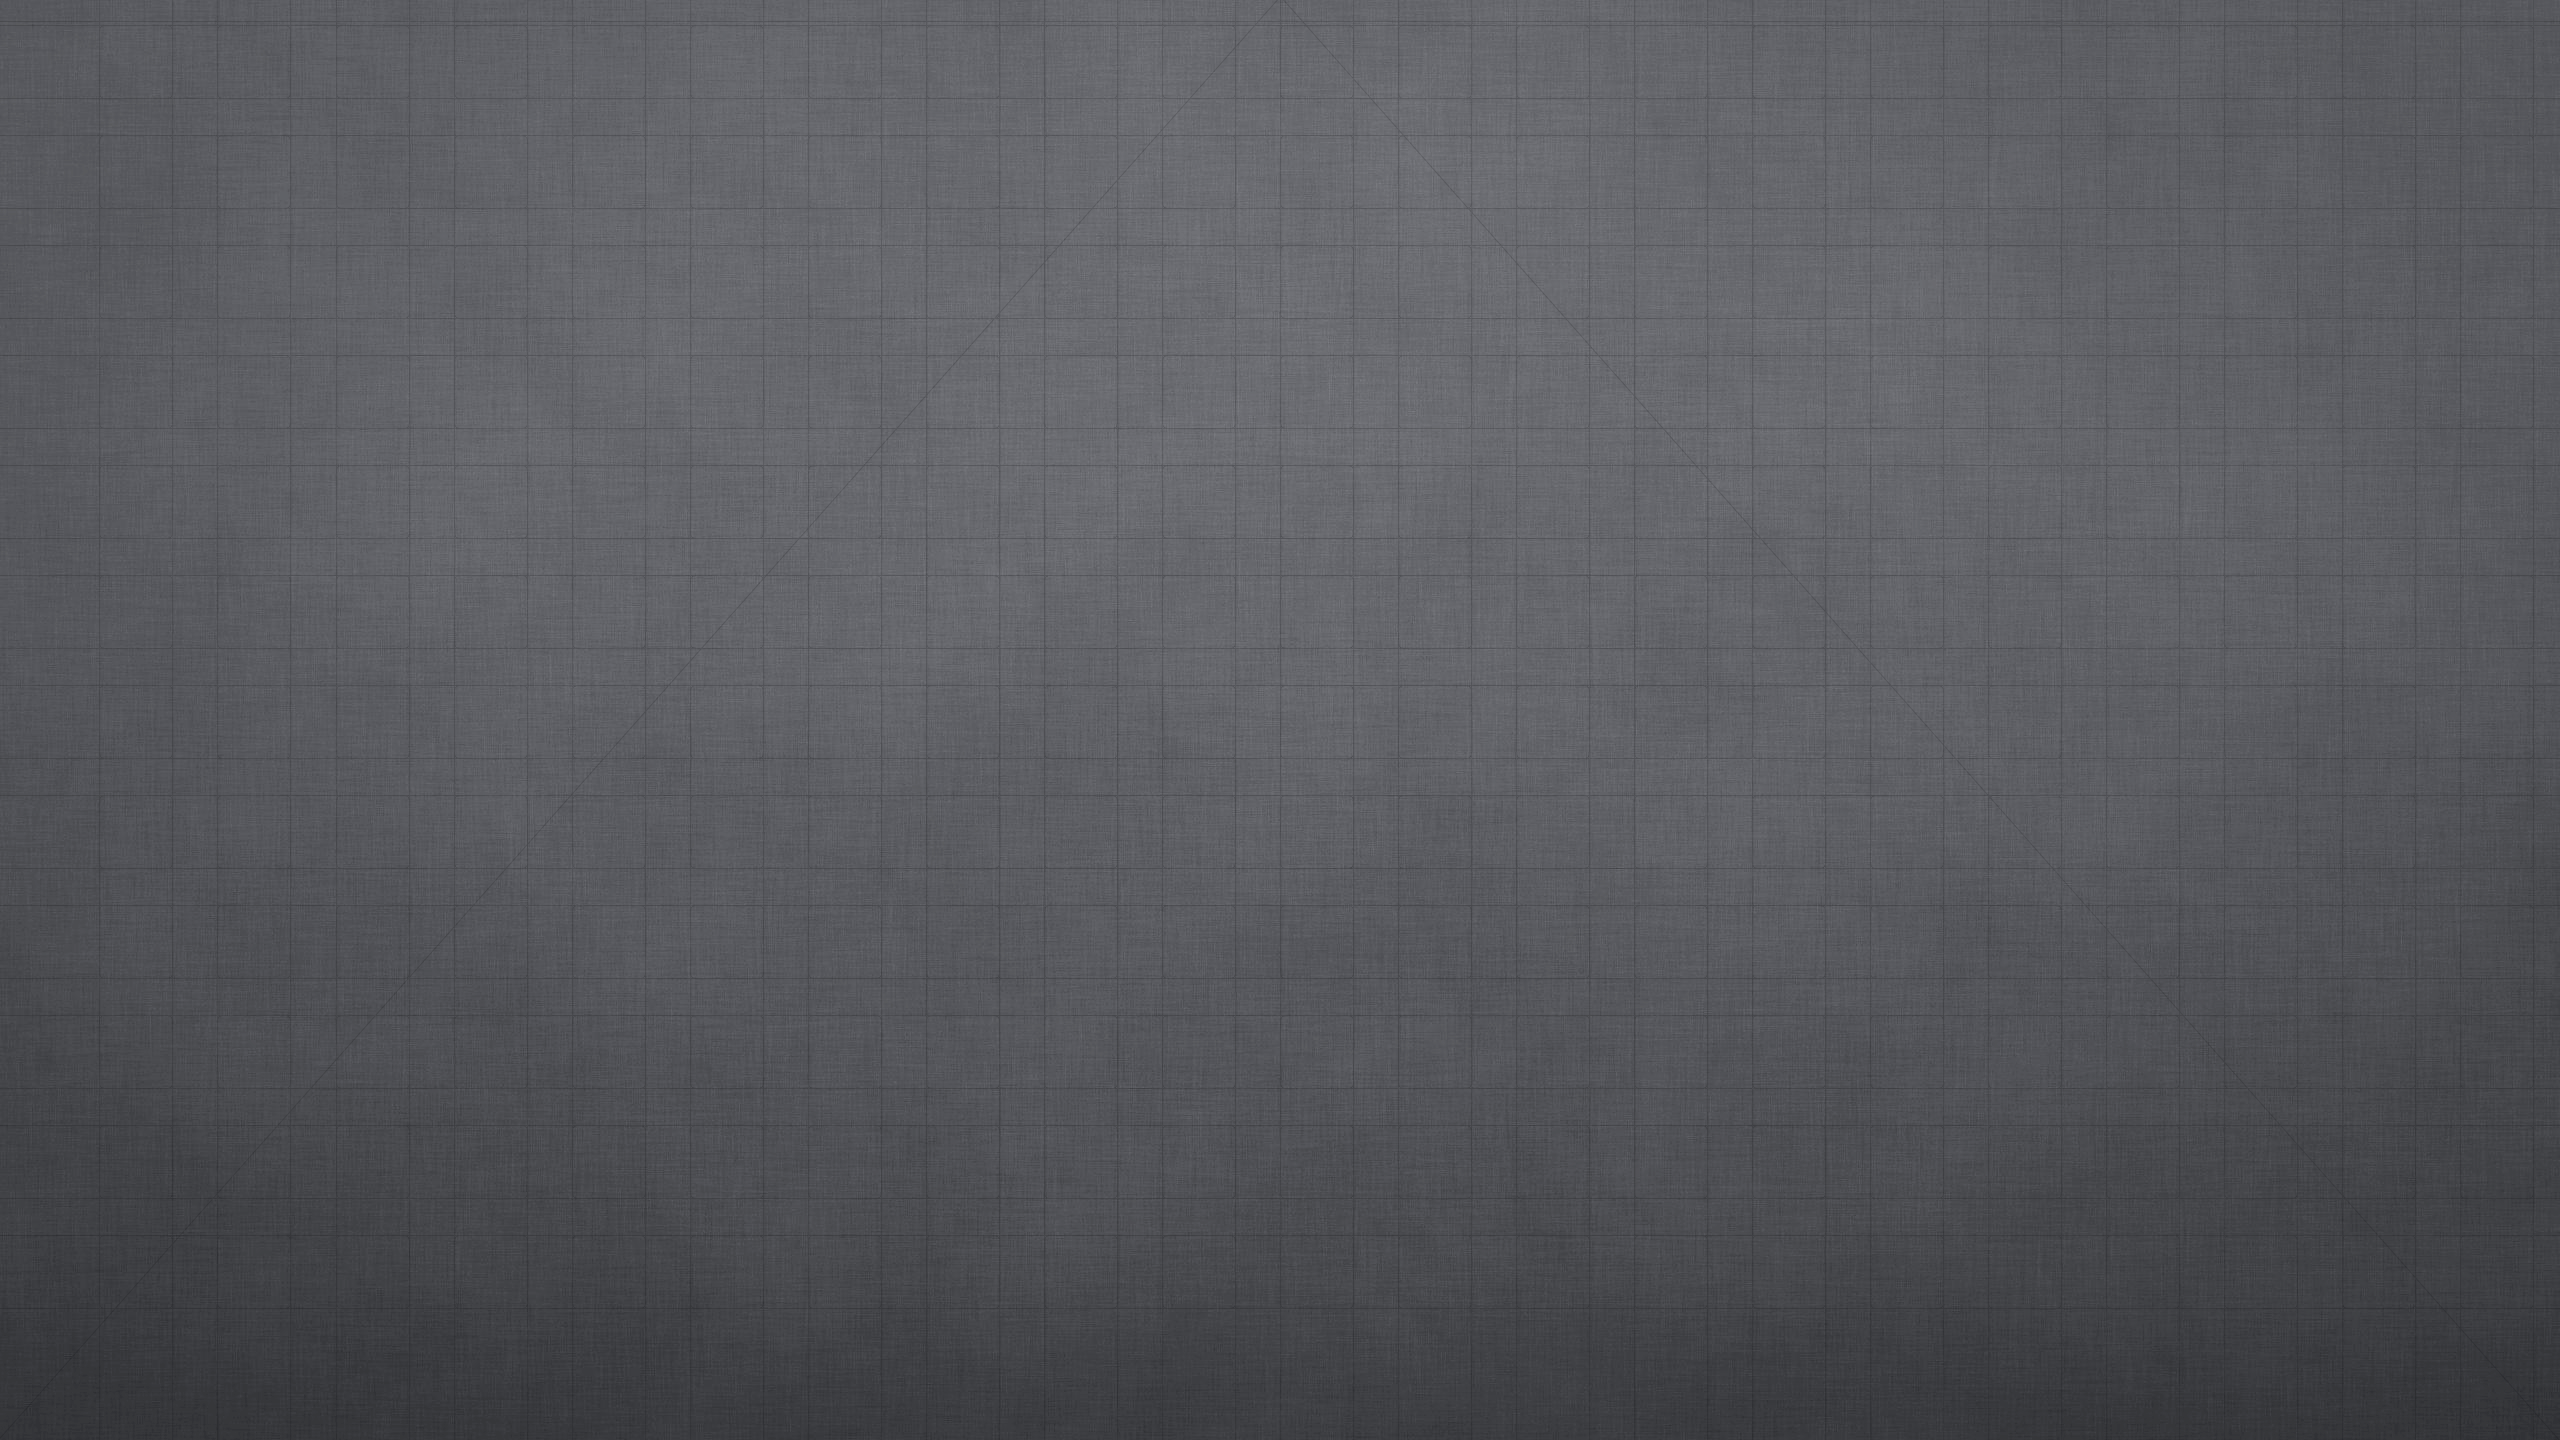 X Mac Osx Lion Mission Control Grid Wallpaper Actual Size